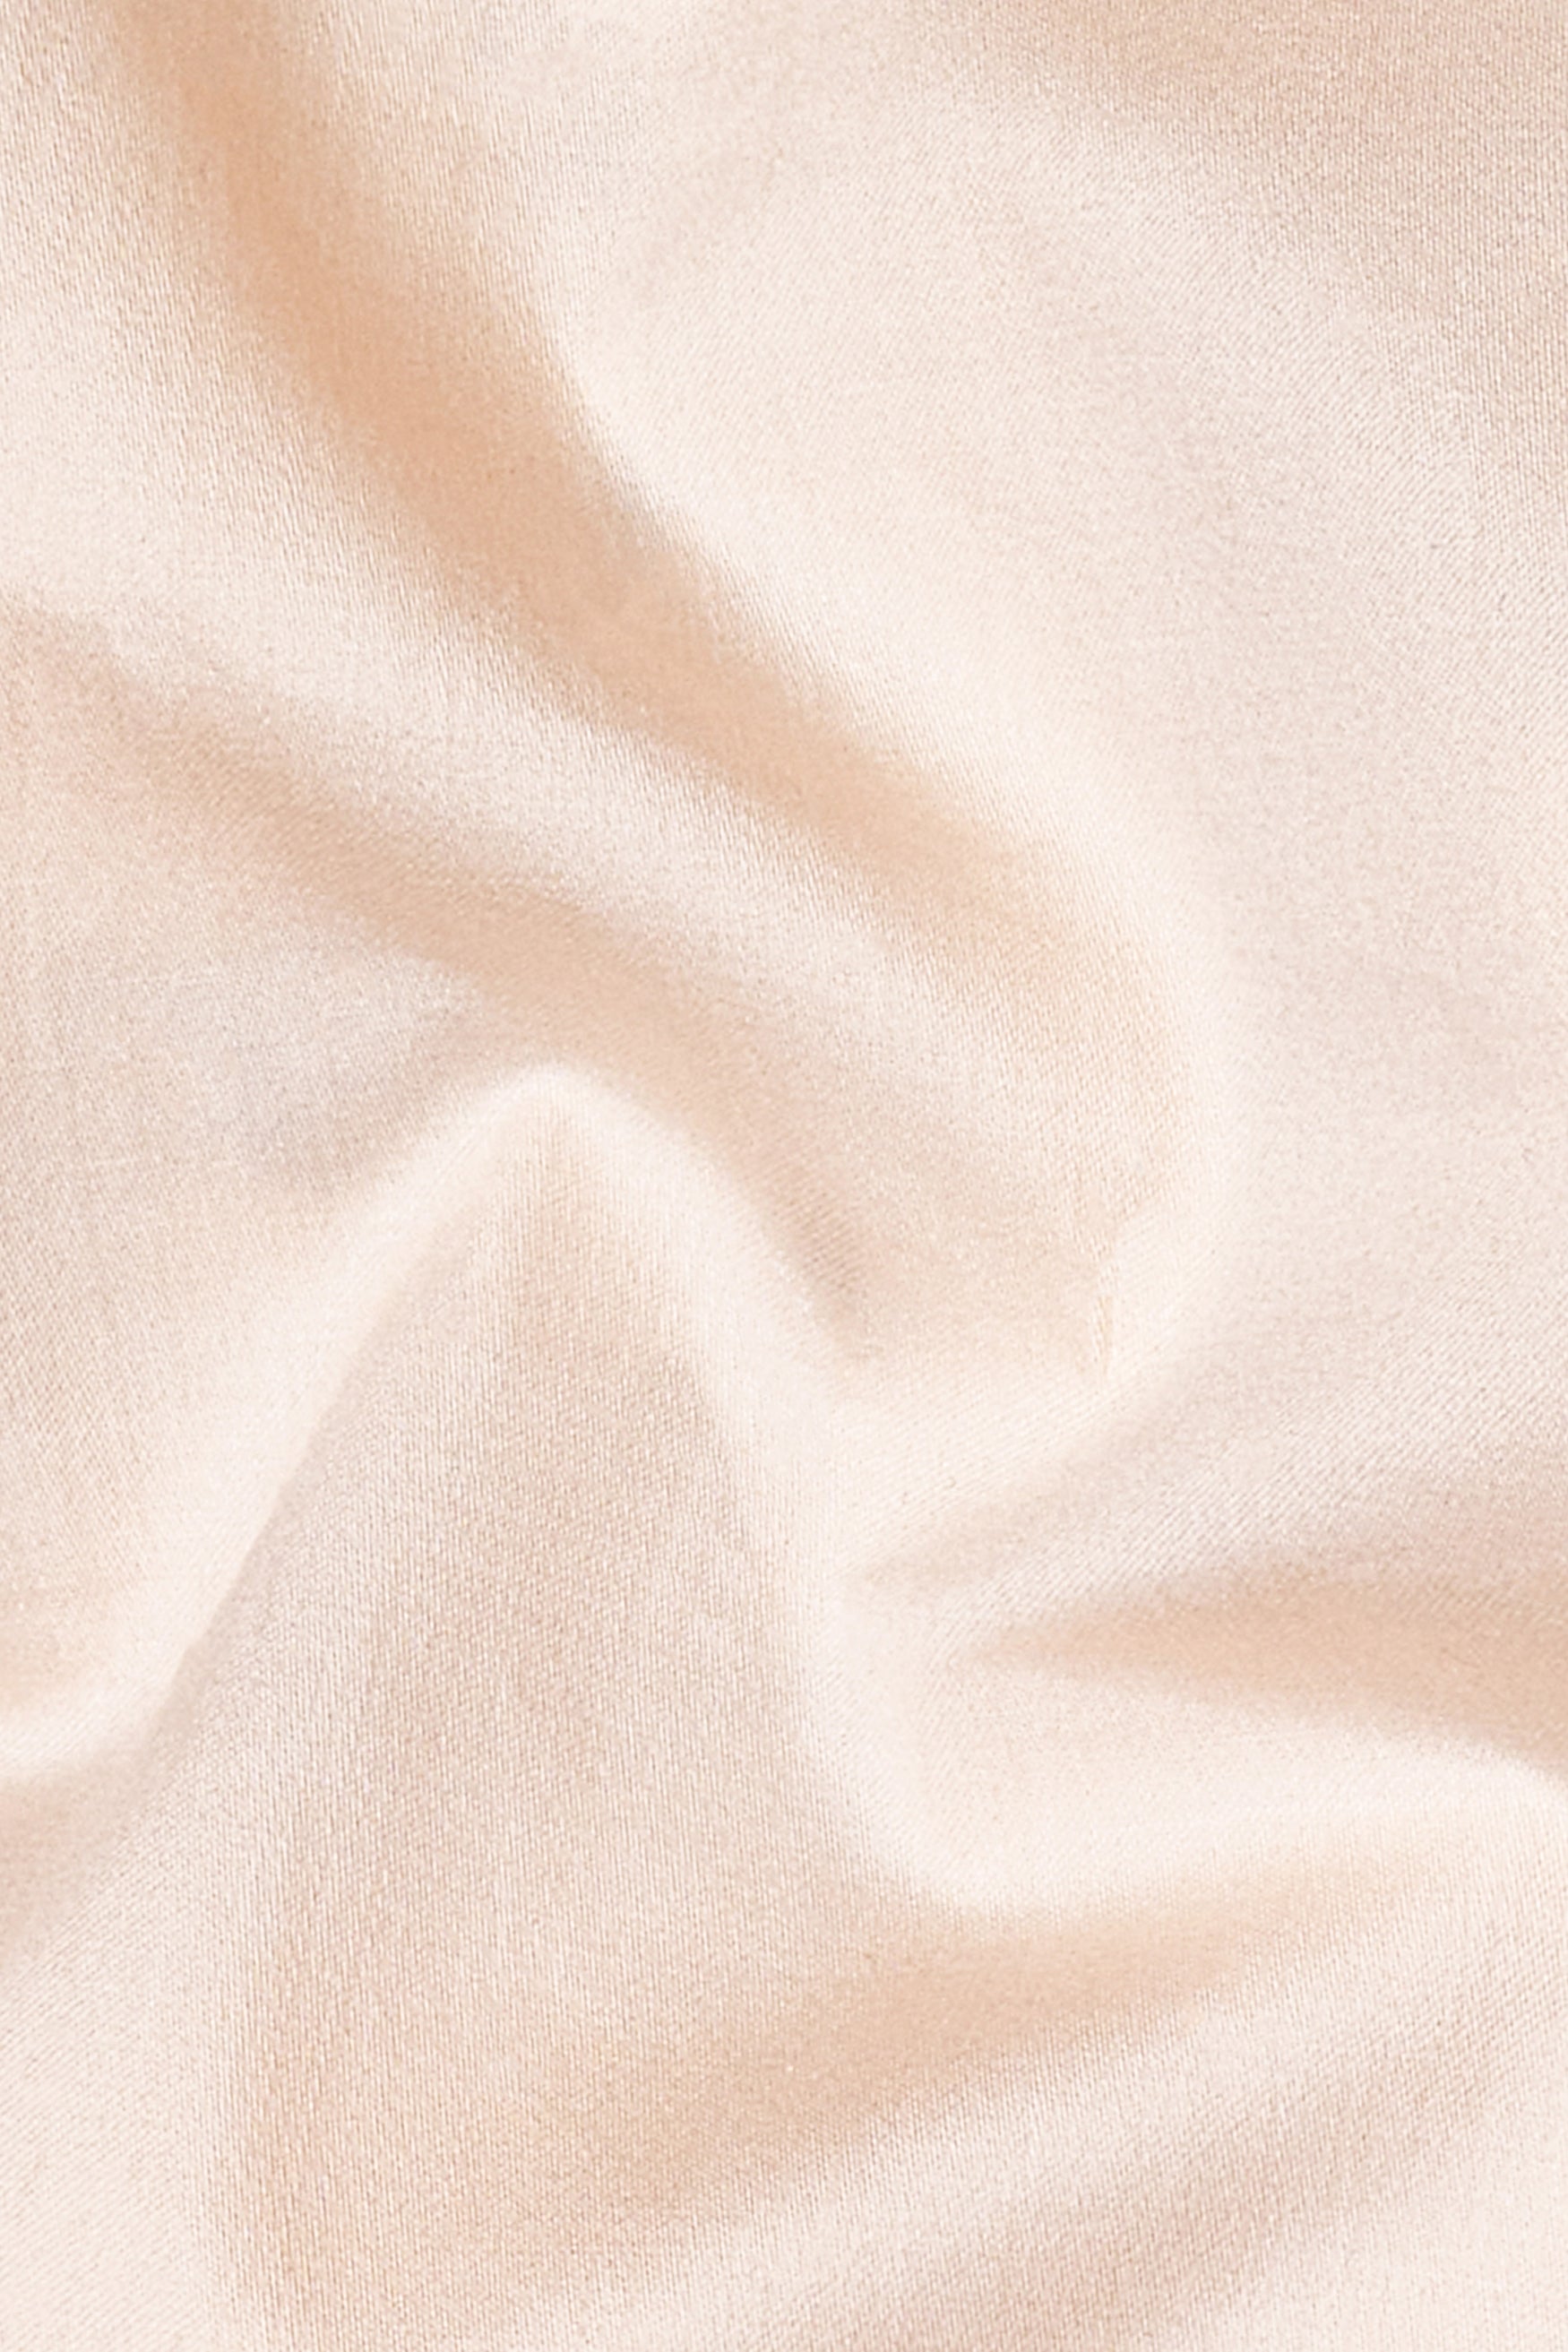 Gainsboro Beige Subtle Sheen Super Soft Premium Cotton Pathani